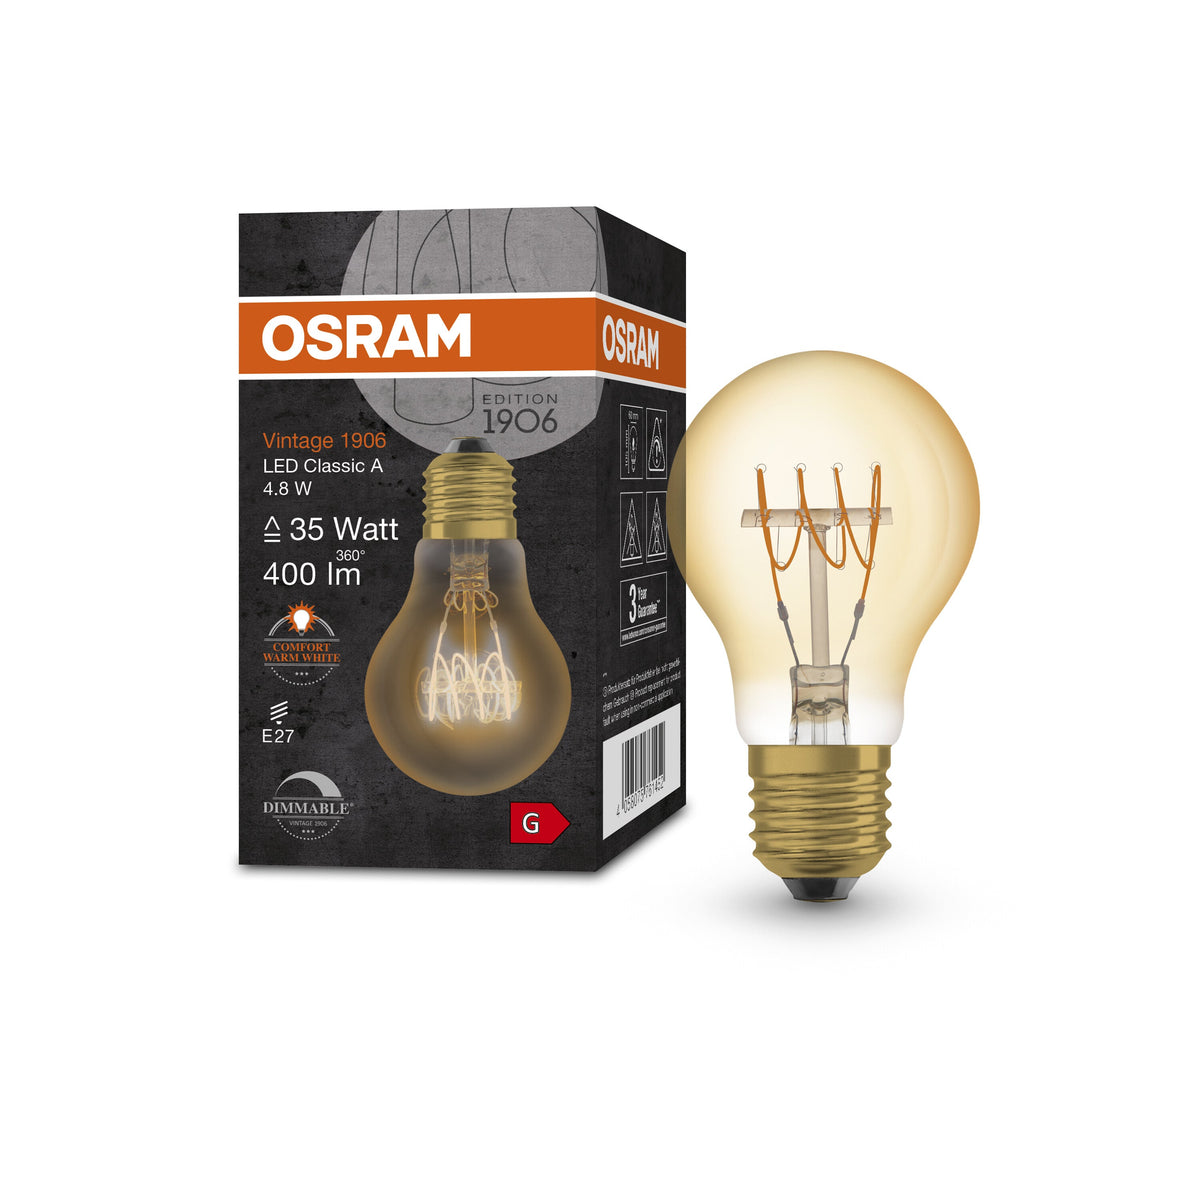 OSRAM Vintage 1906 LED-Lampe, Gold-Tönung, 4,8W, 400lm